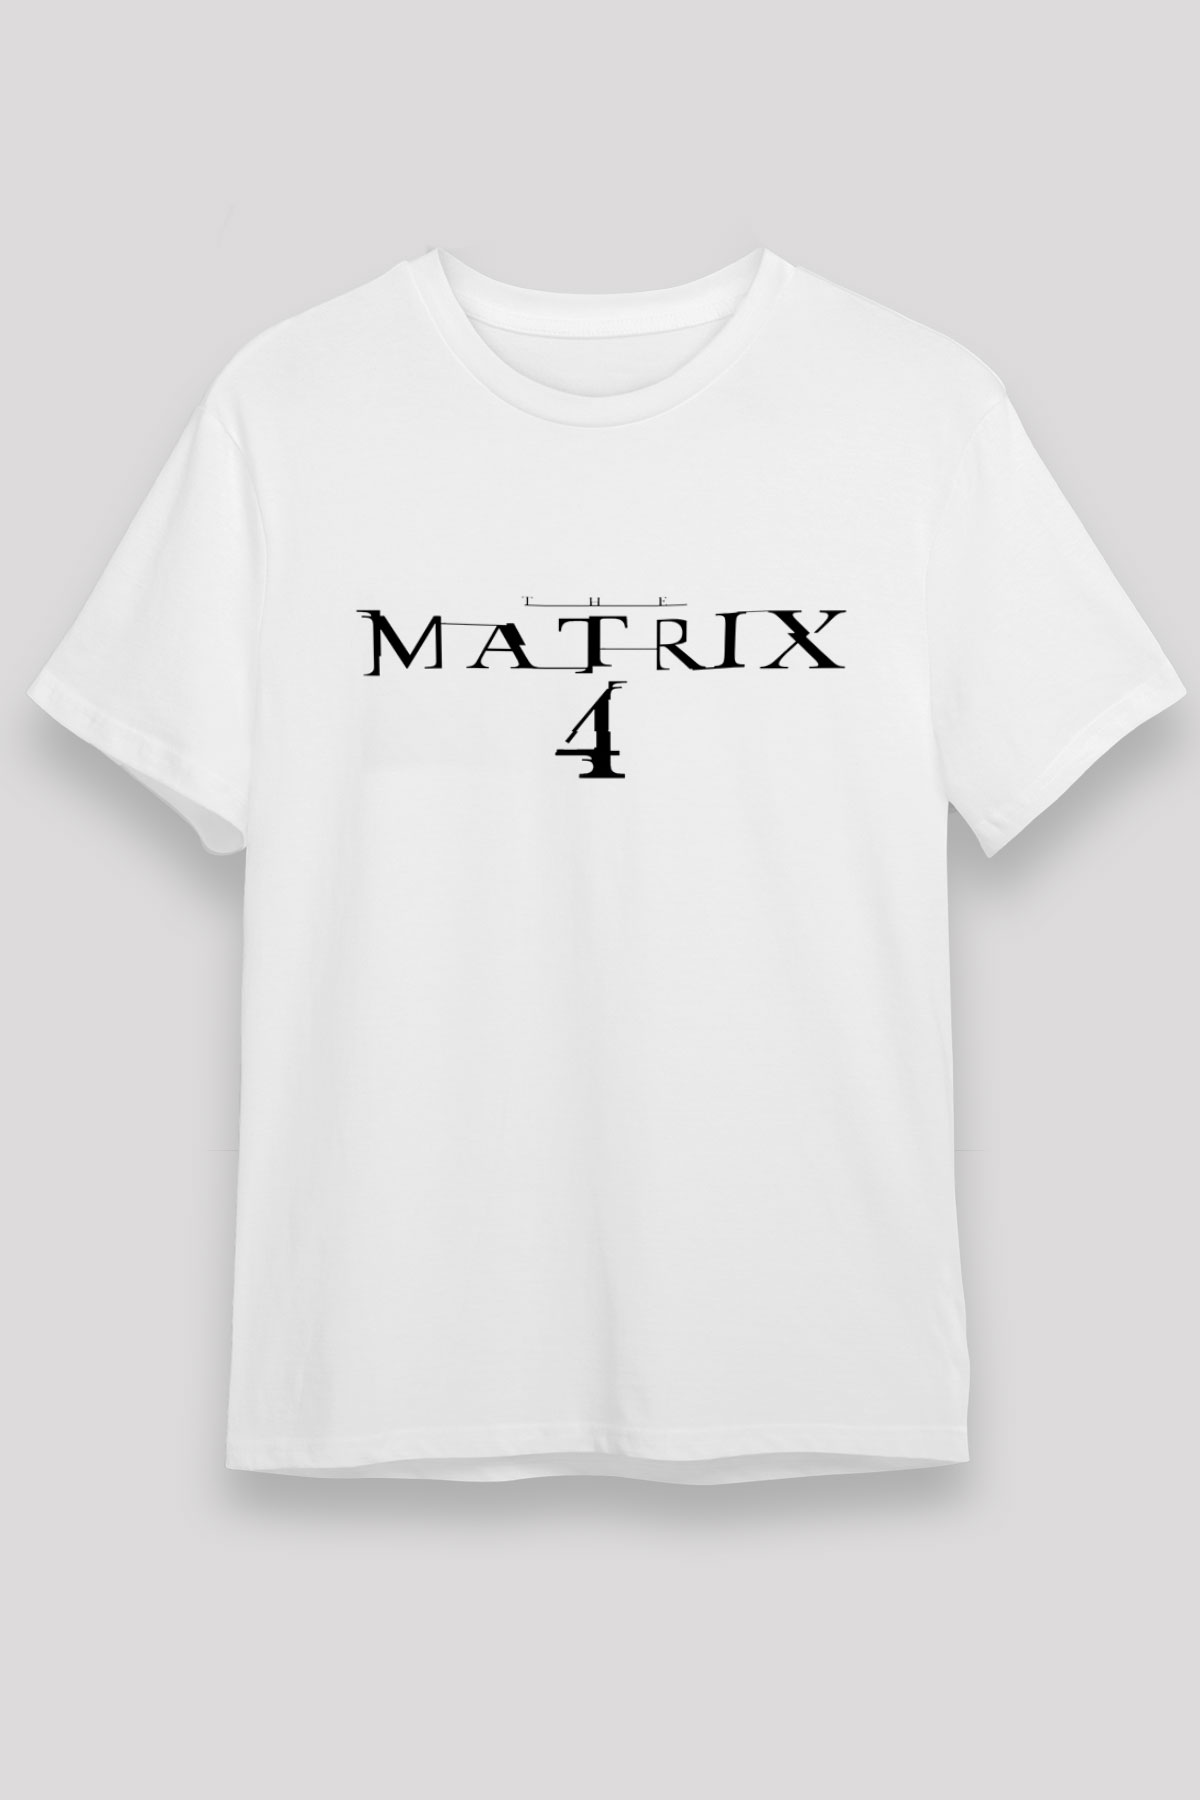 The Matrix  T shirt,Movie , Tv and Games Tshirt 03